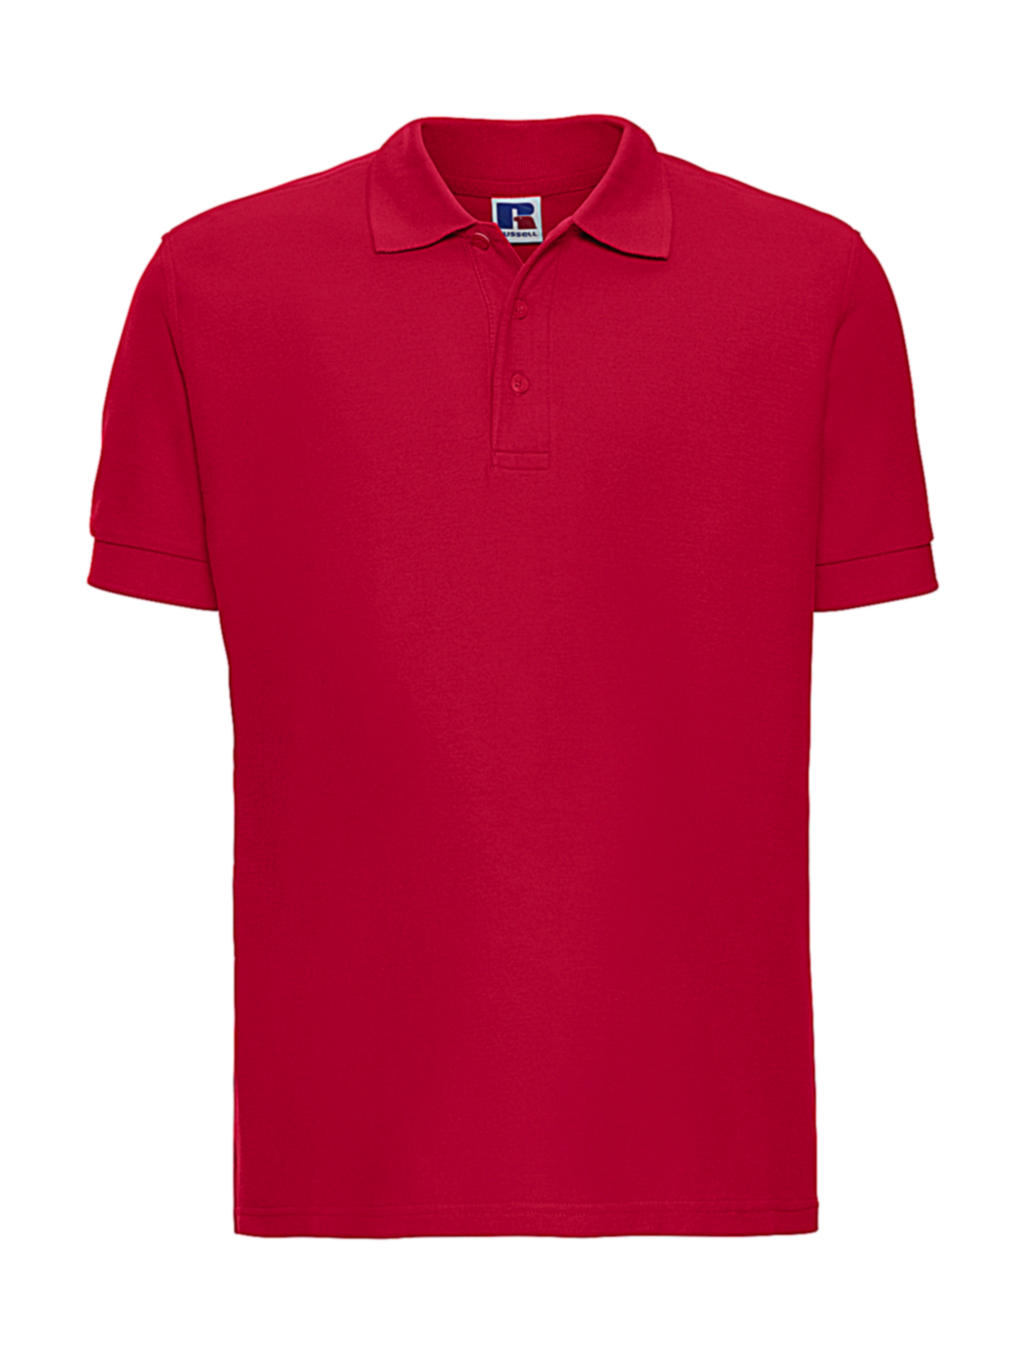  Mens Ultimate Cotton Polo in Farbe Classic Red